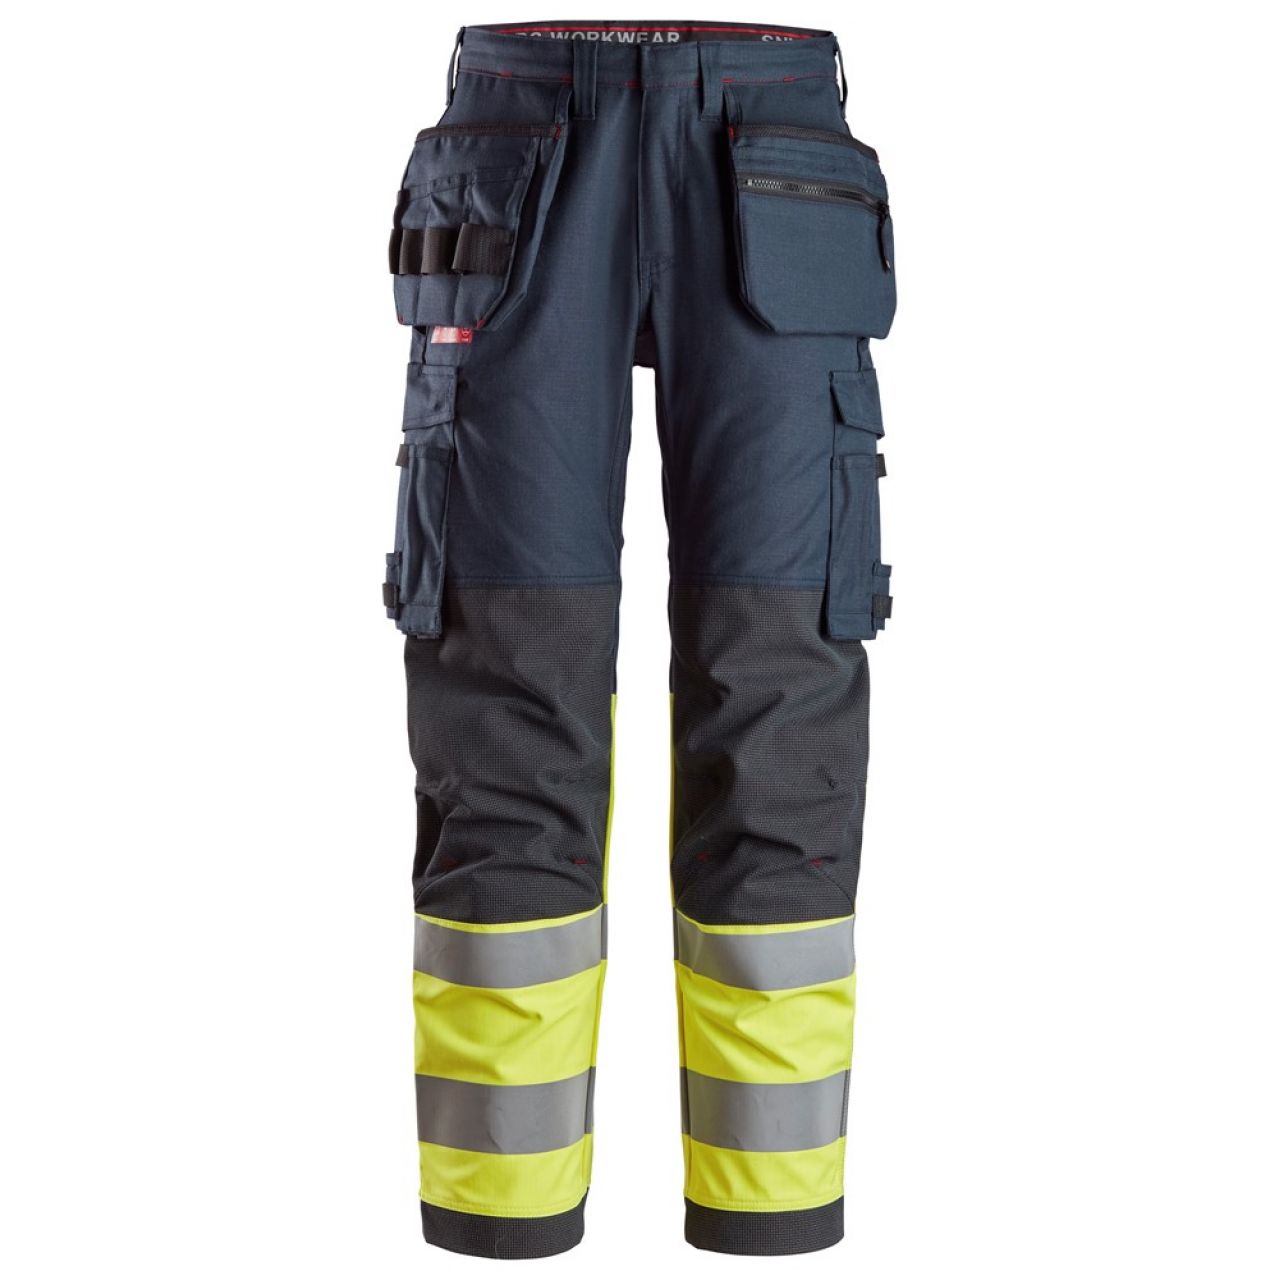 6263 Pantalones largos de trabajo de alta visibilidad clase 1 con bolsillos flotantes ProtecWork azul marino-amarillo talla 154